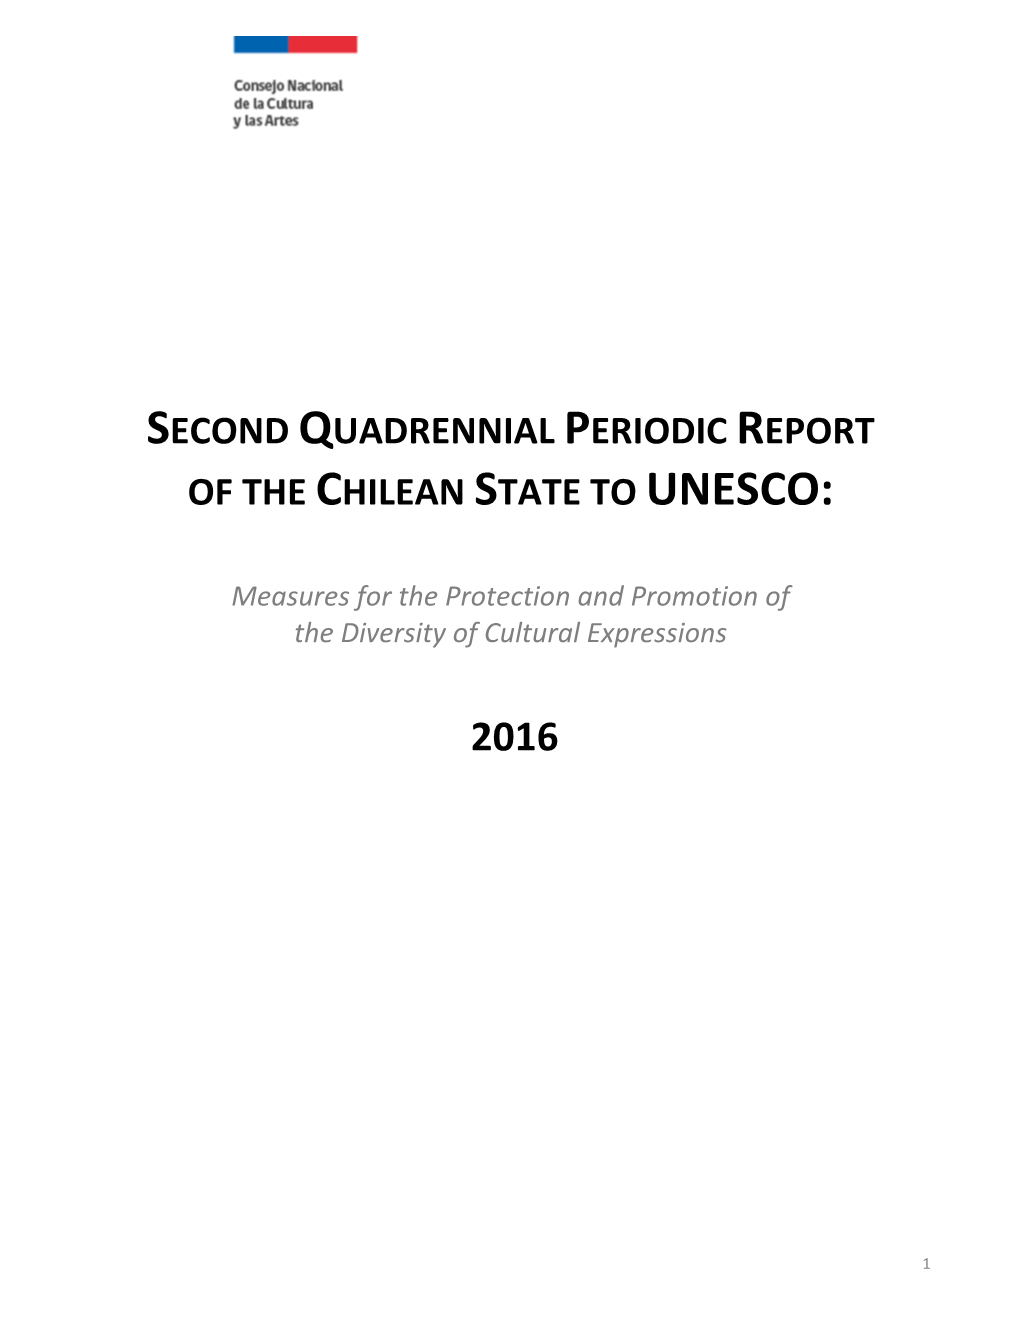 Second Quadrennial Periodic Report of the Chilean State to Unesco